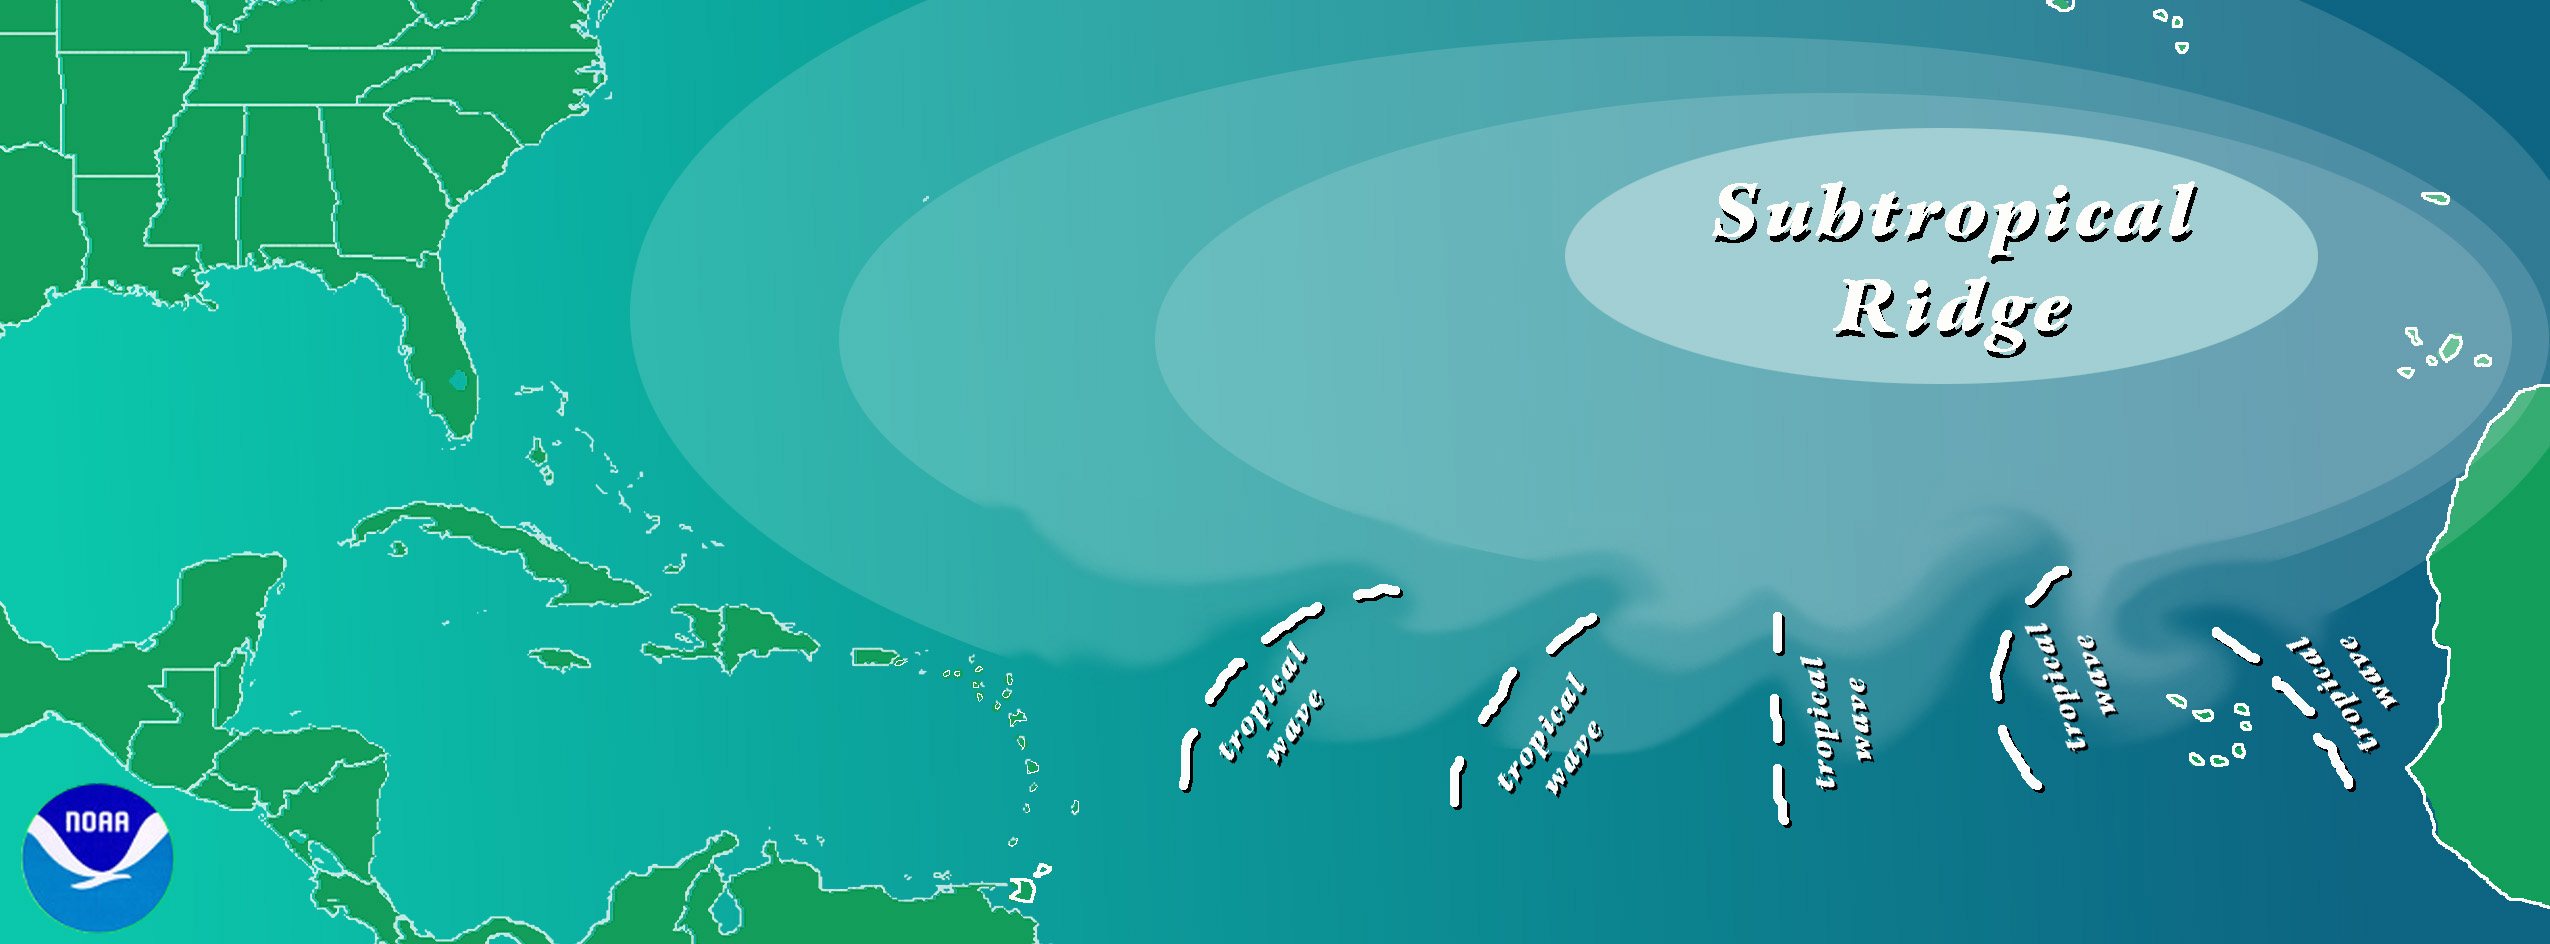 Hurrikan Entstehung - Alles beginnt mit Easterly Waves